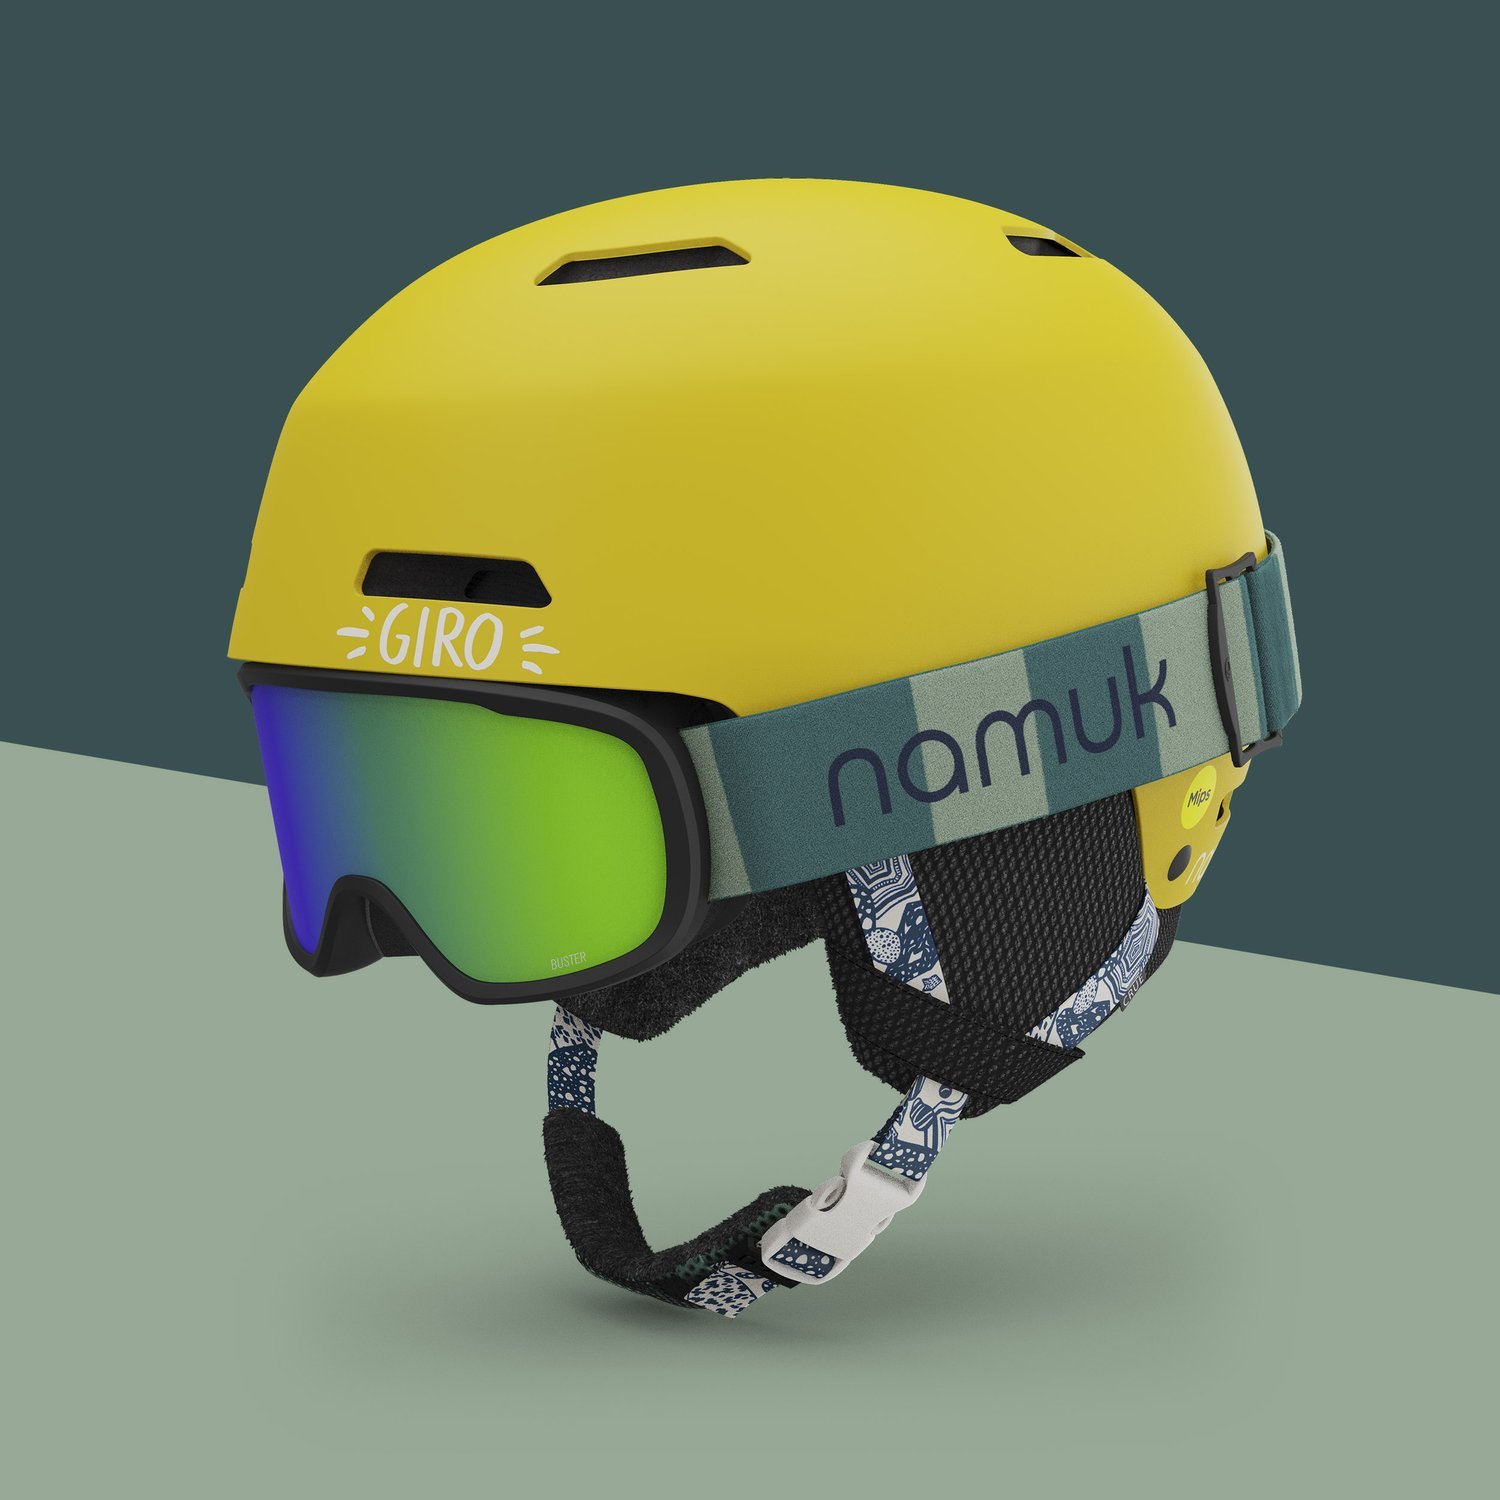 Giro Namuk Crue Helmet Goggles product renderings